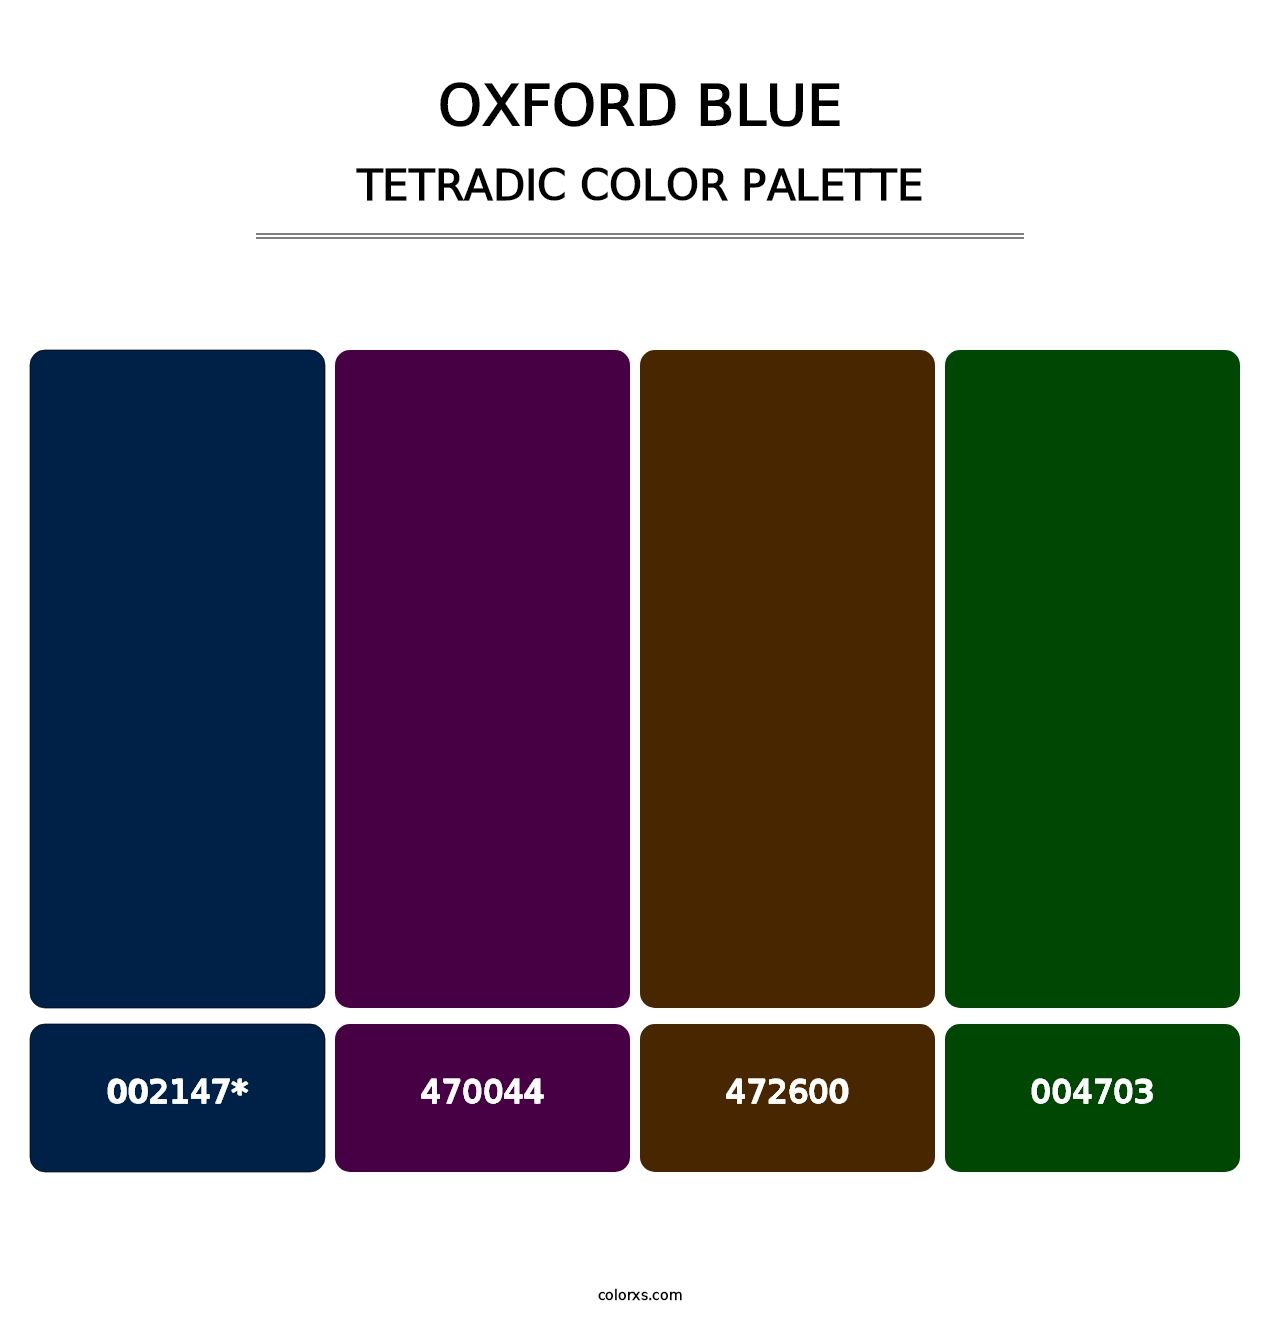 Oxford Blue - Tetradic Color Palette